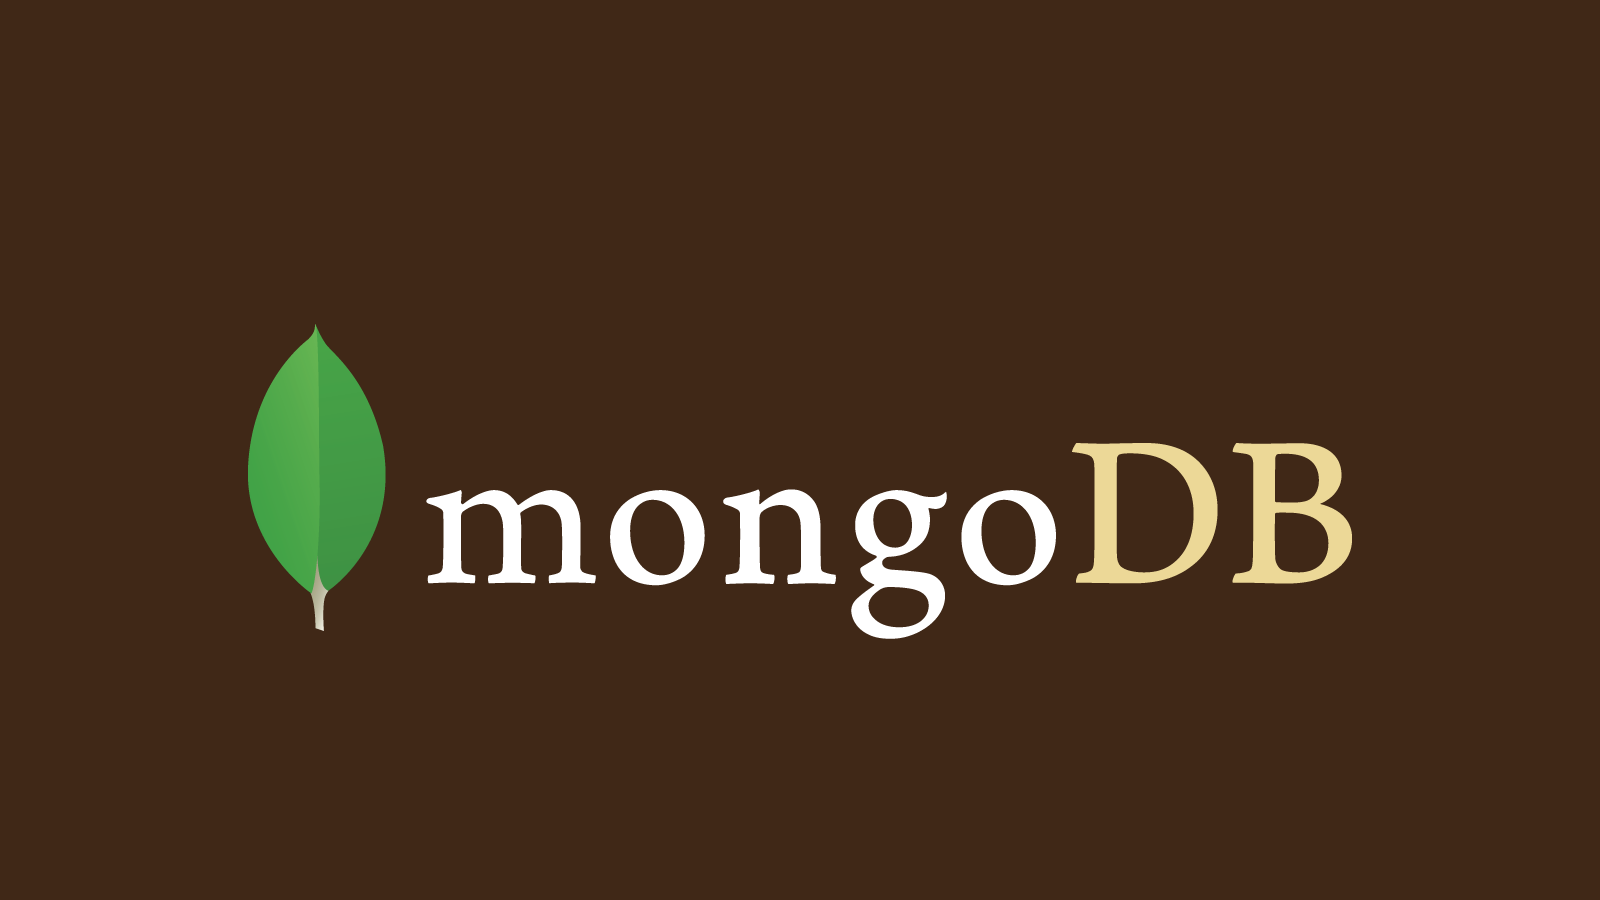 Download MongoDB Logo PNG and Vector (PDF, SVG, Ai, EPS) Free